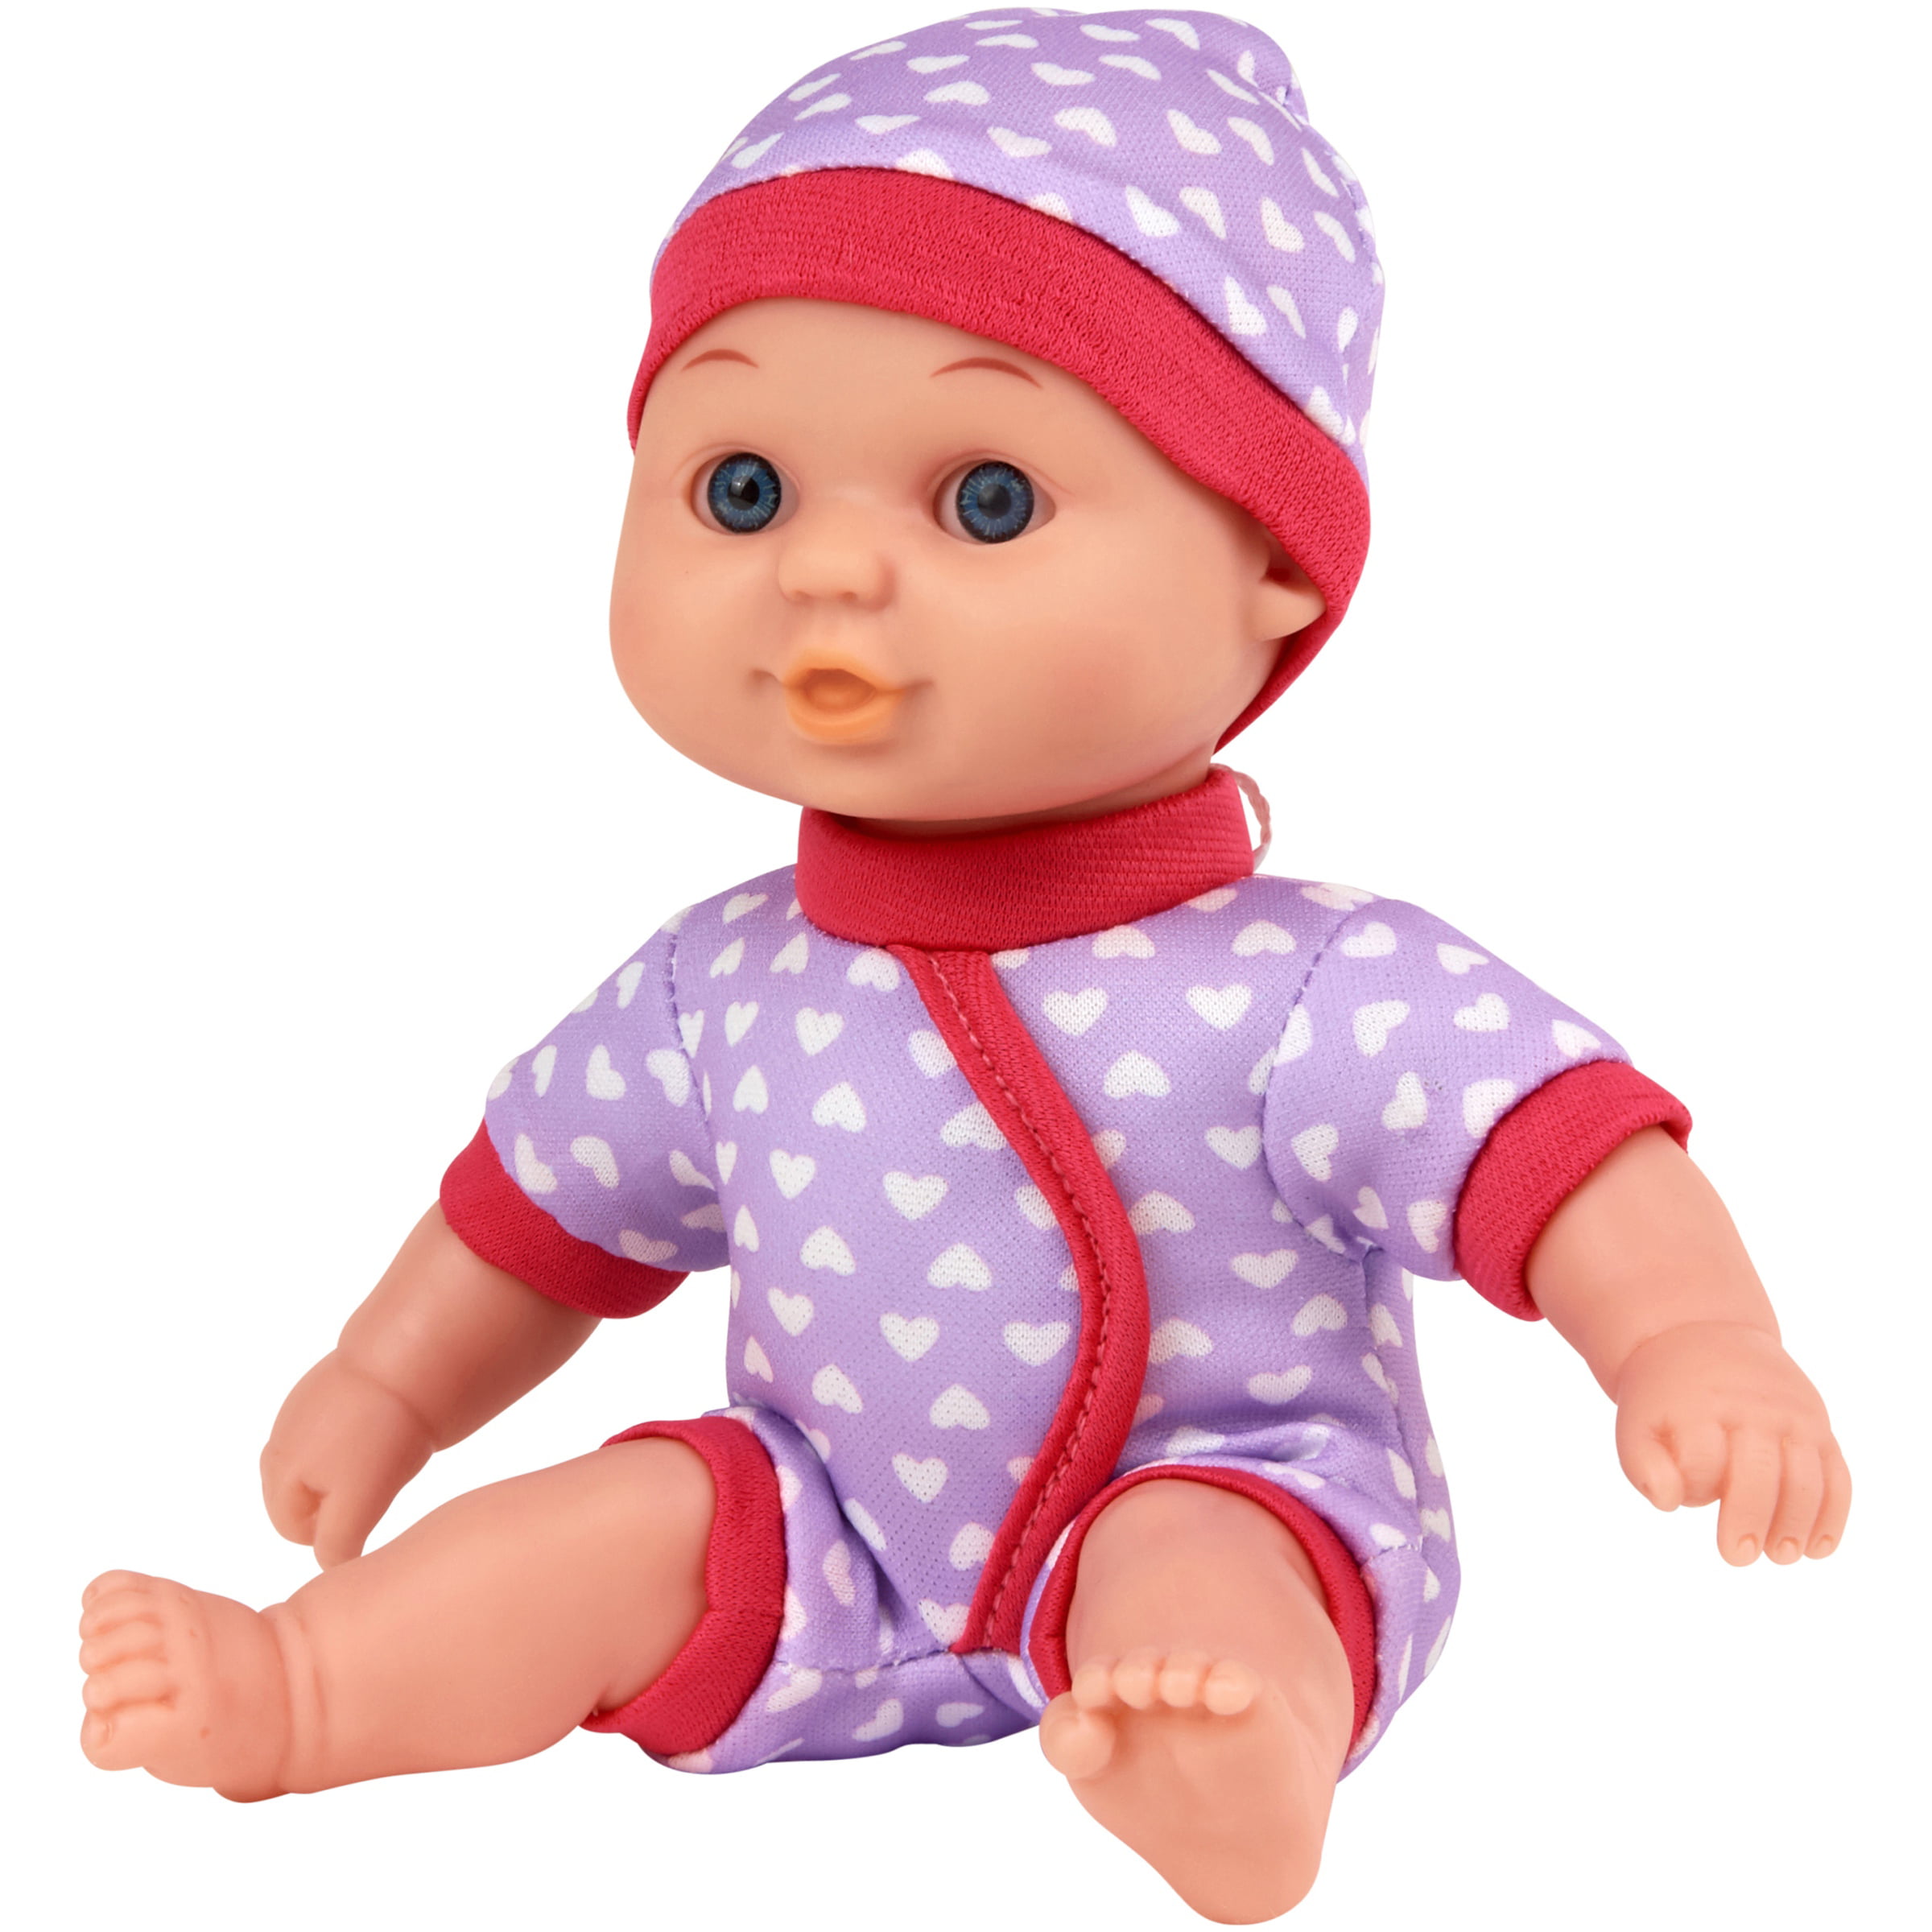 soft baby doll walmart